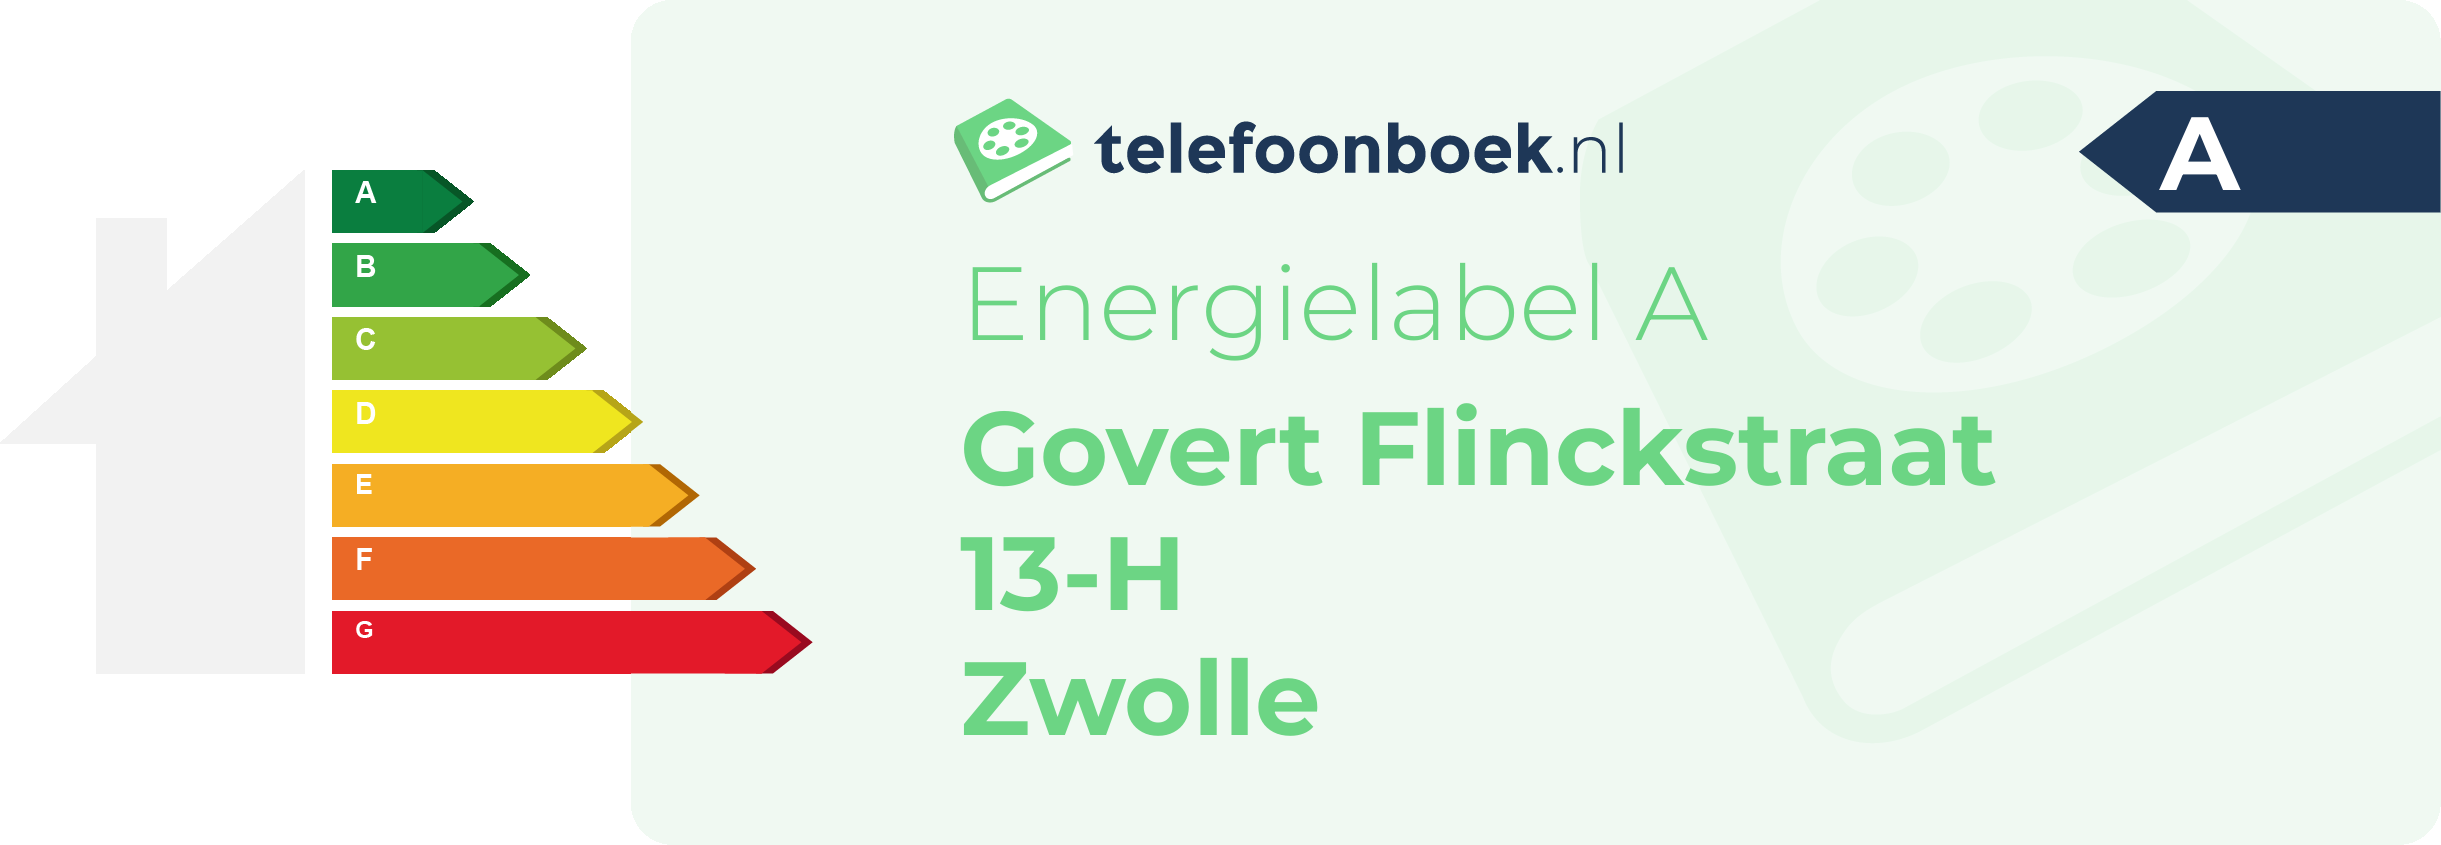 Energielabel Govert Flinckstraat 13-H Zwolle